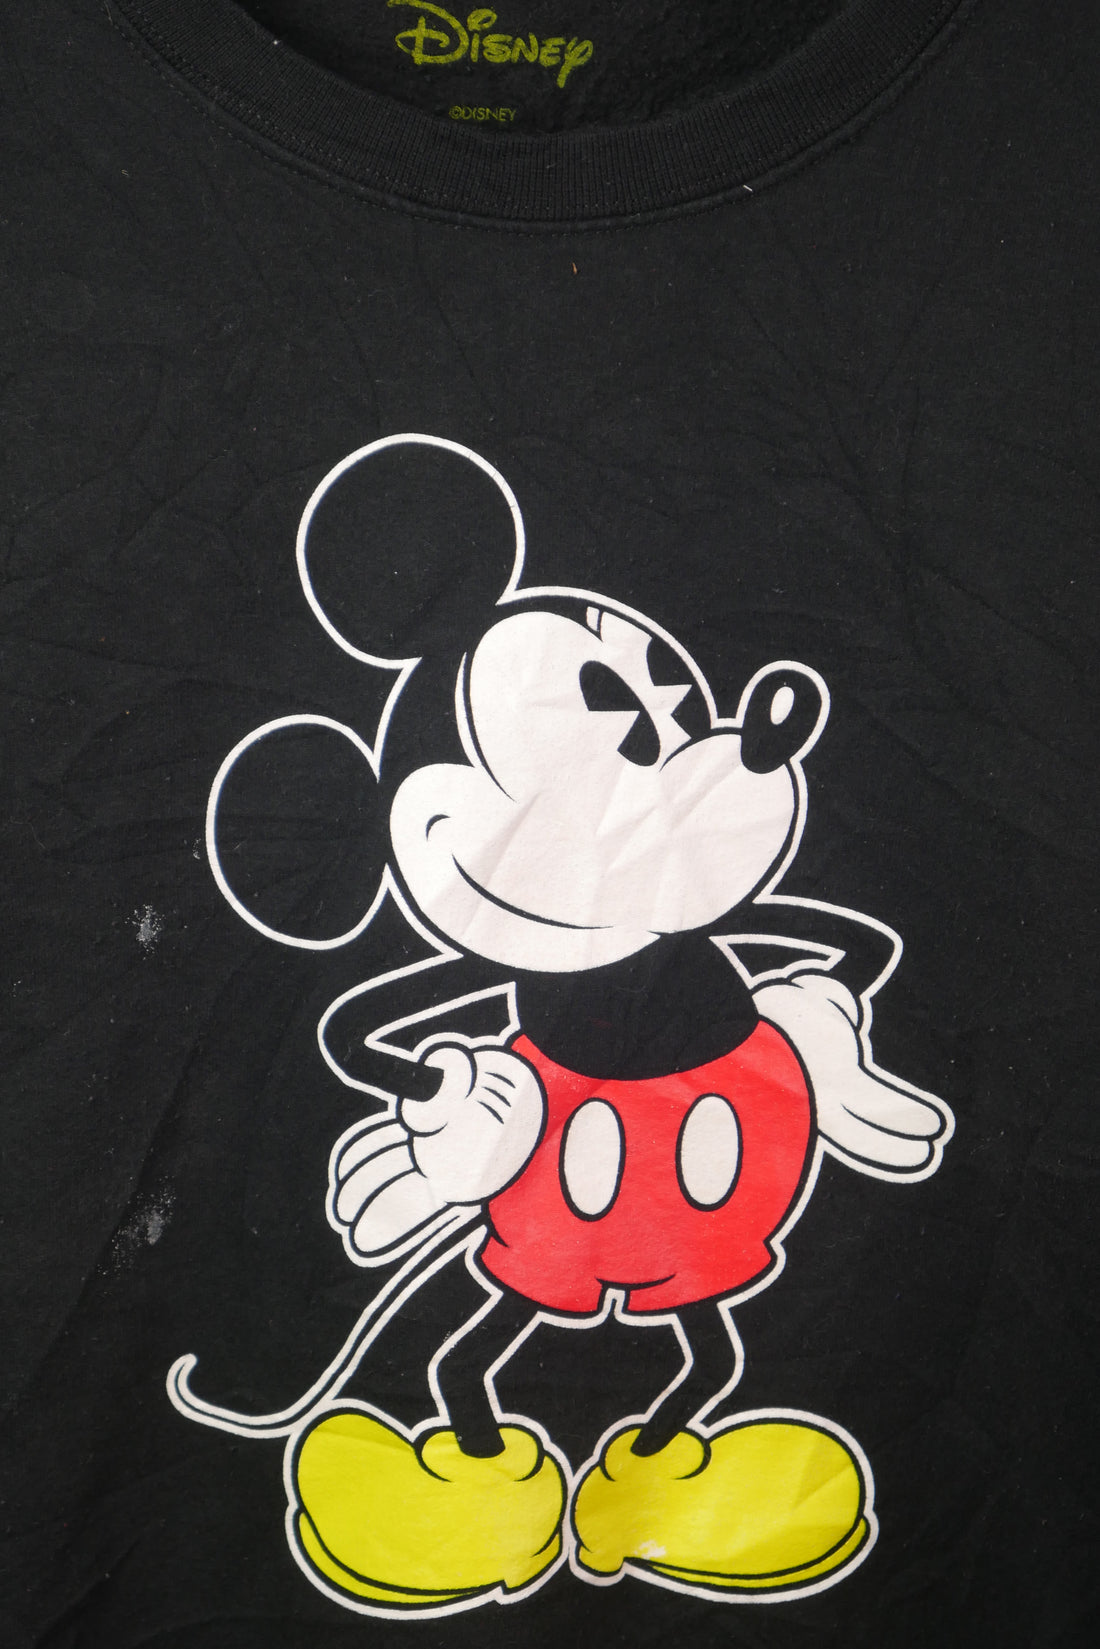 The Disney Mickey Graphic Sweatshirt (L)